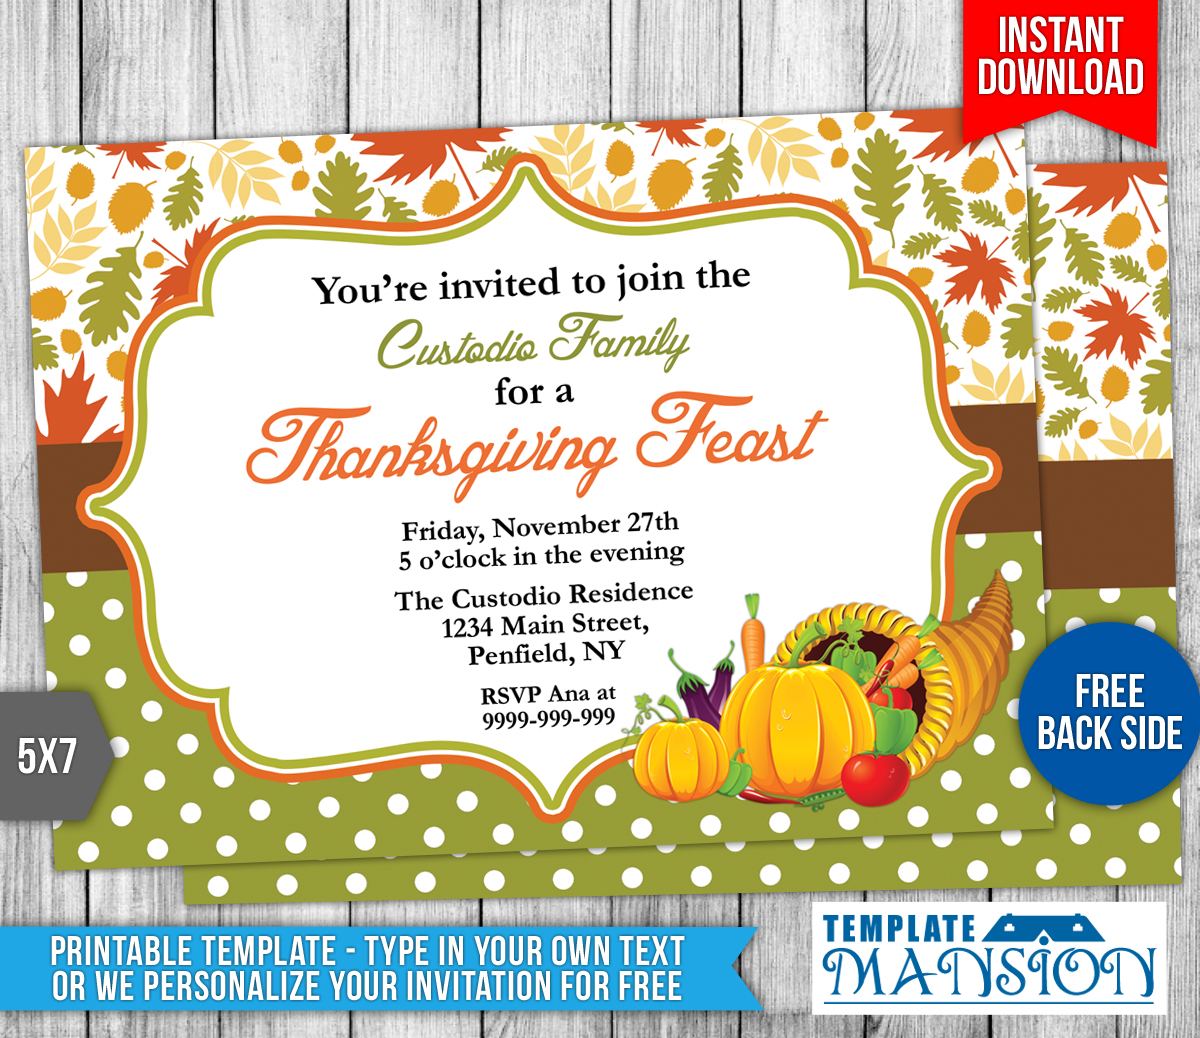 Thanksgiving Invitation Template 2 by templatemansion on DeviantArt